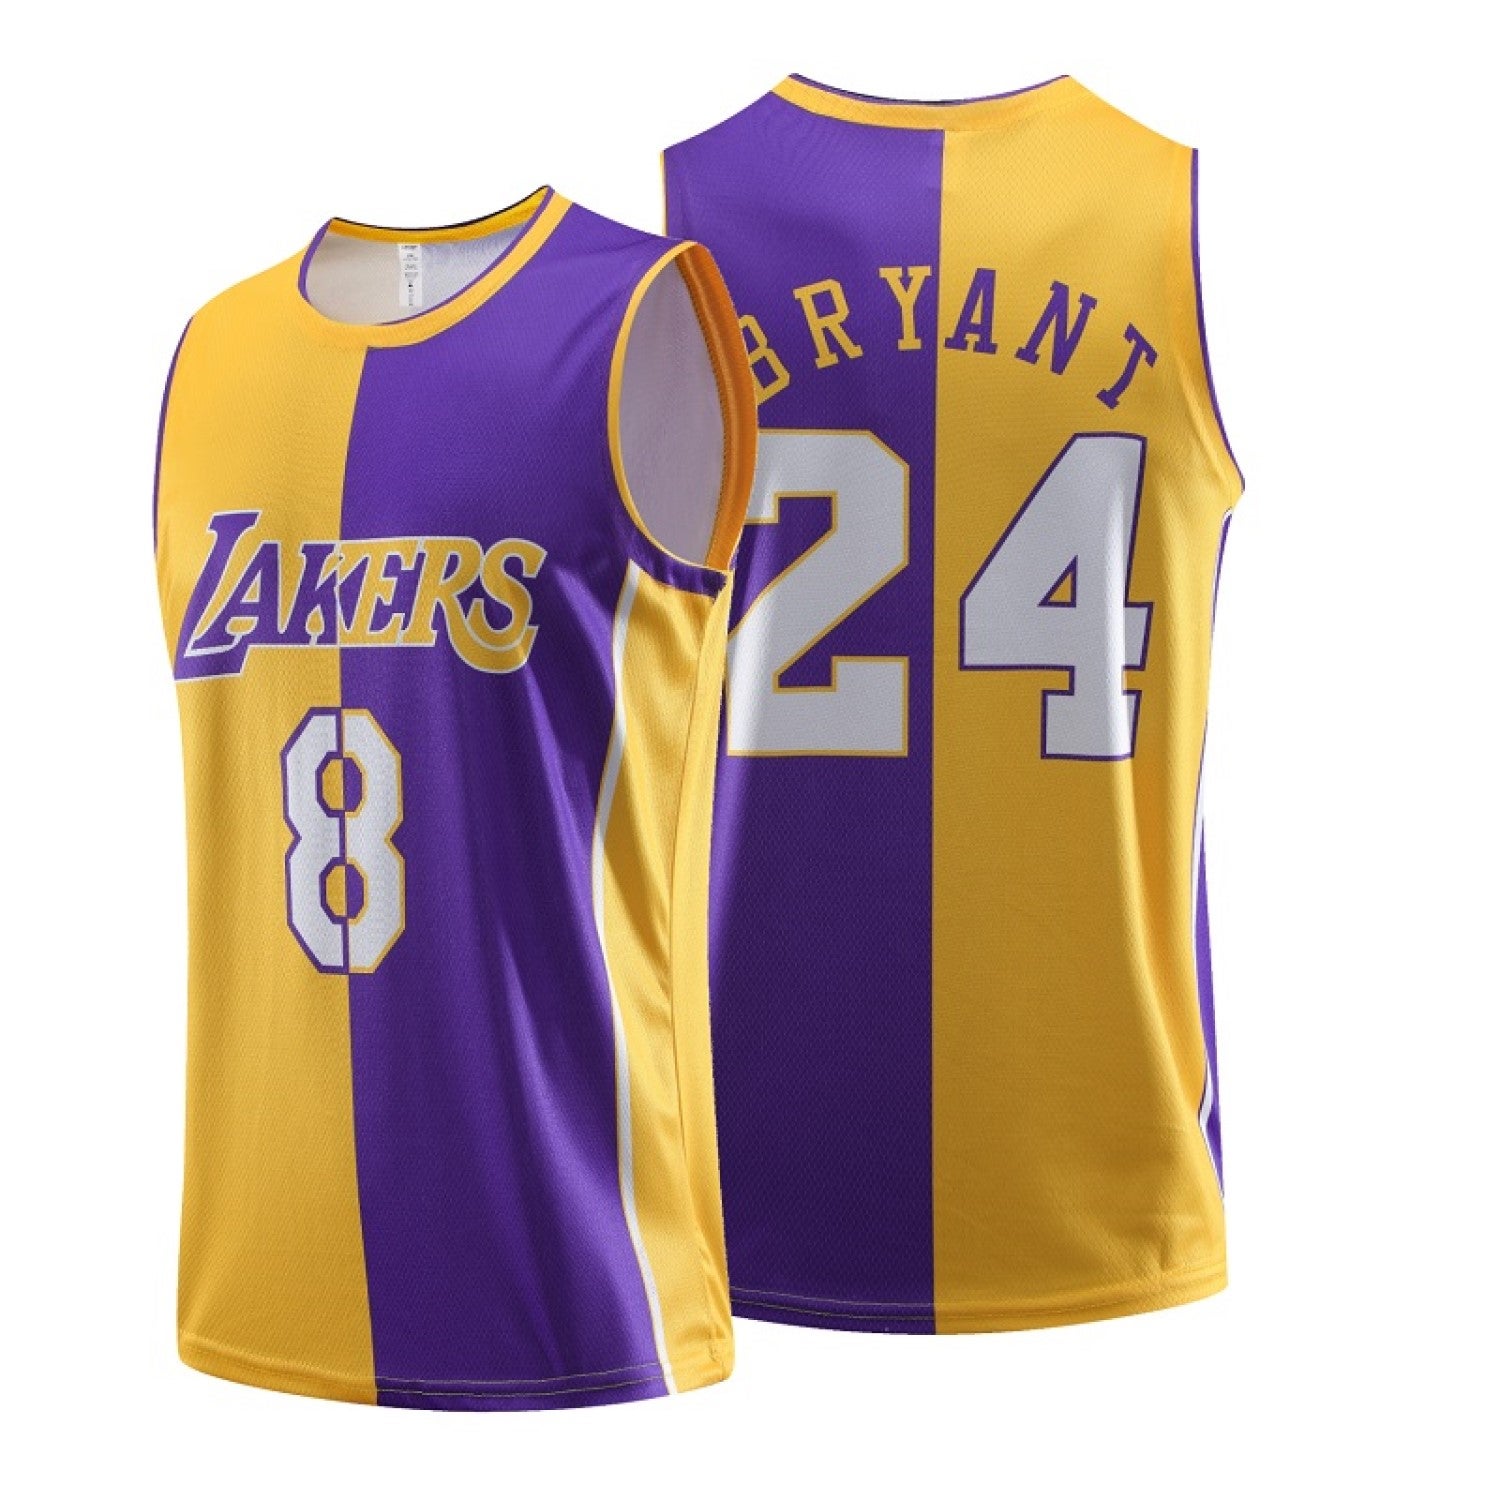 Men's Kobe Bryant Jersey - S-XL - Black - Front #8 - Back #24 - Lakers